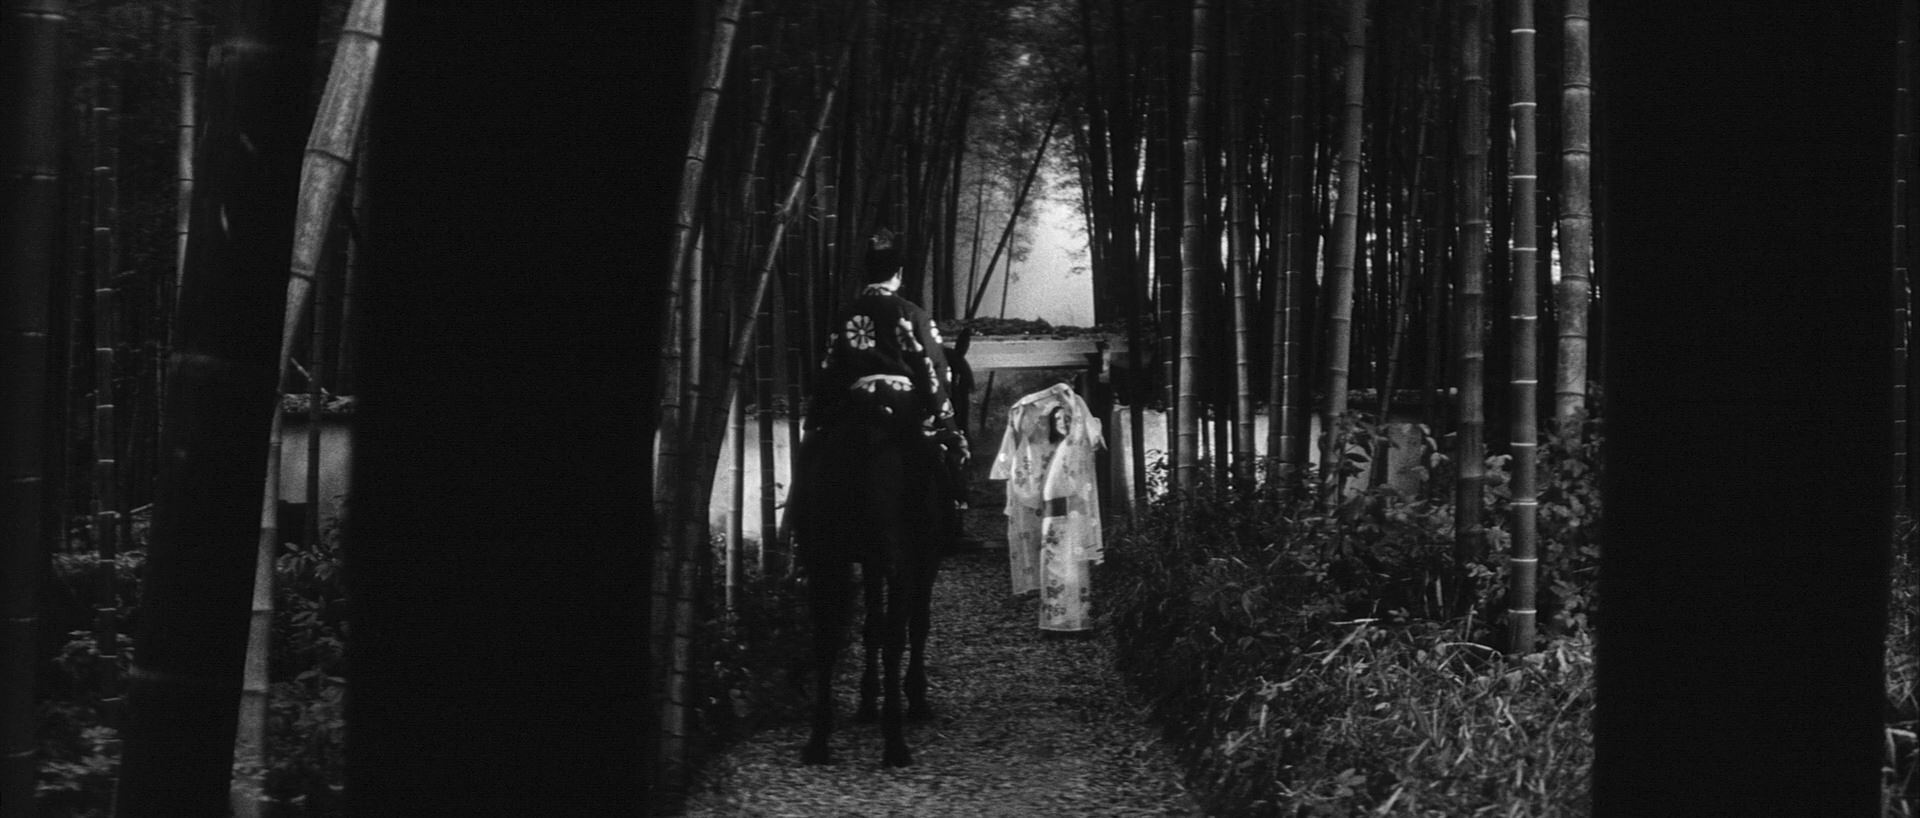 Kuroneko (1968)